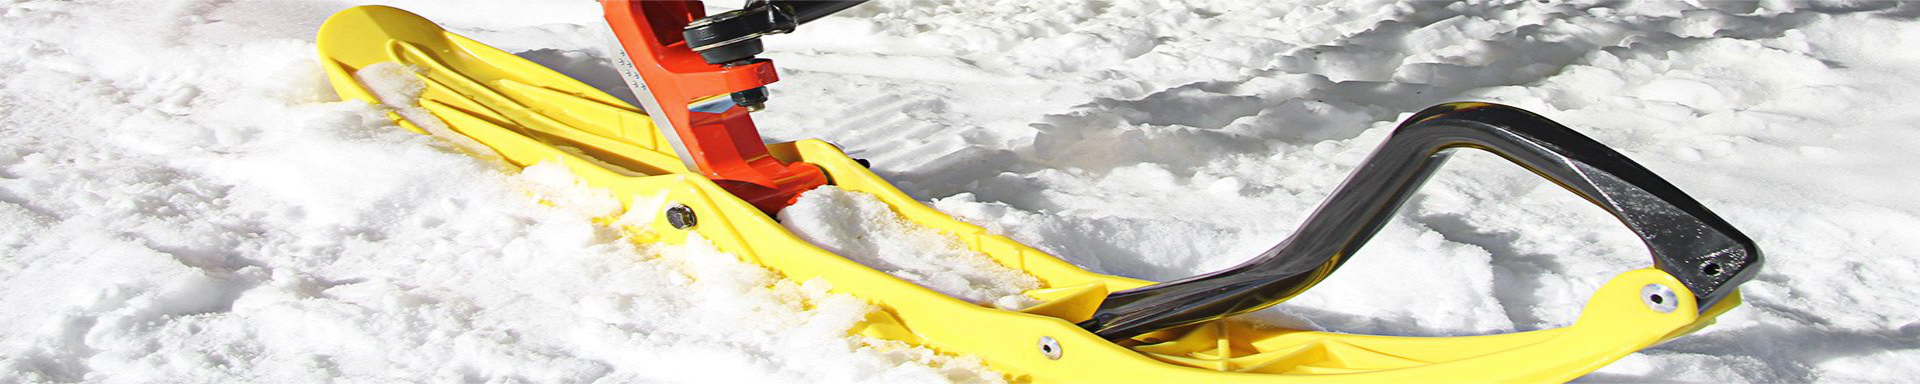 Snowmobile Skis | MunroPowersports.com | Munro Industries mp-100803082005